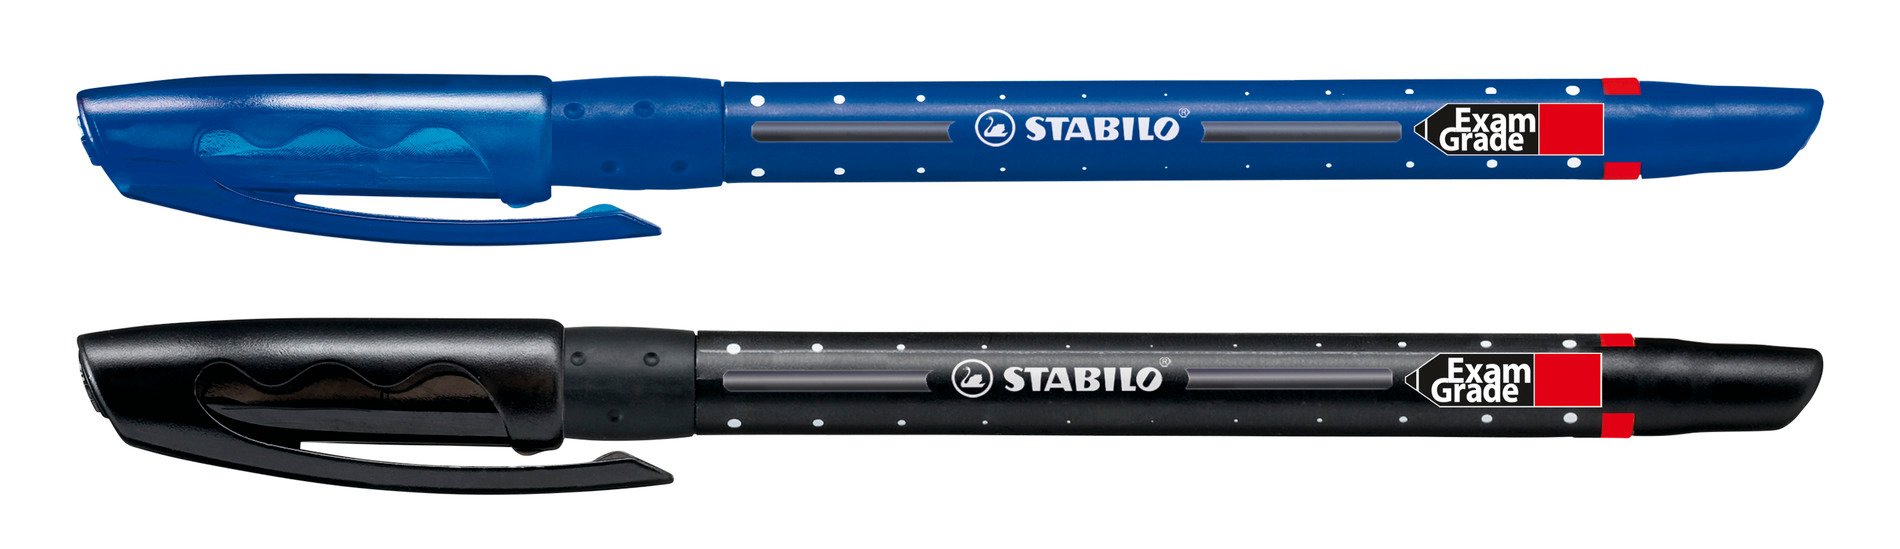 Kugelschreiber STABILO Exam Grade